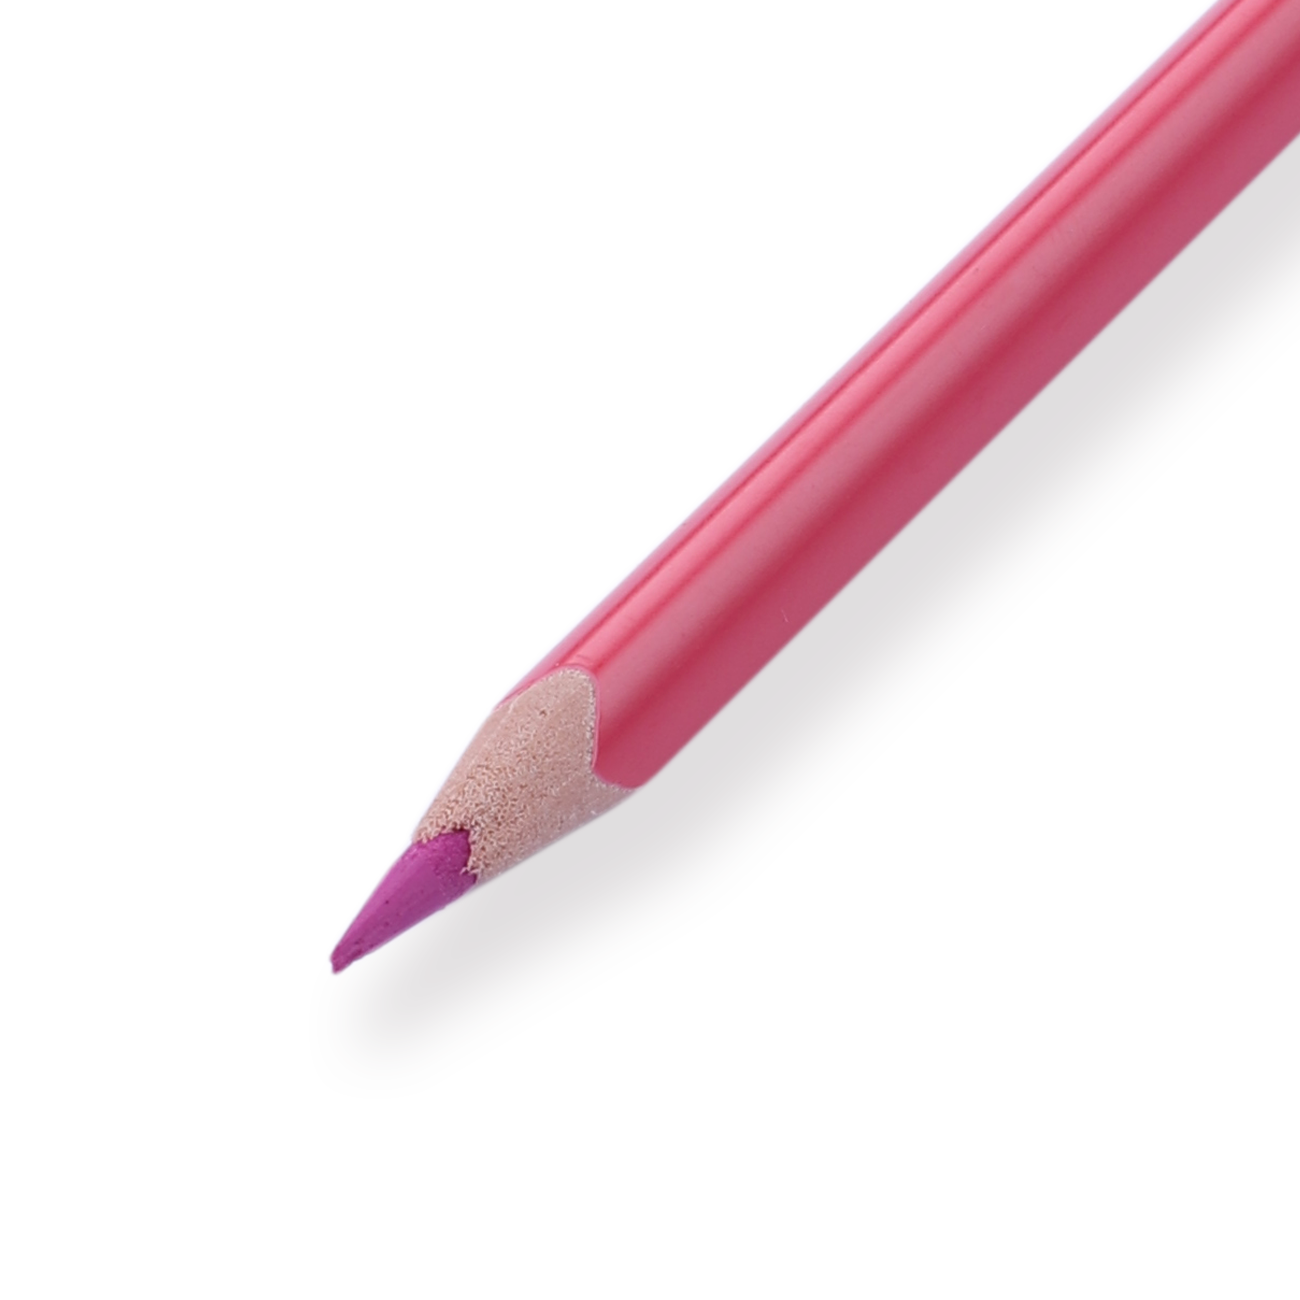 Stationery Pal Slide Pen Pouch - Purple